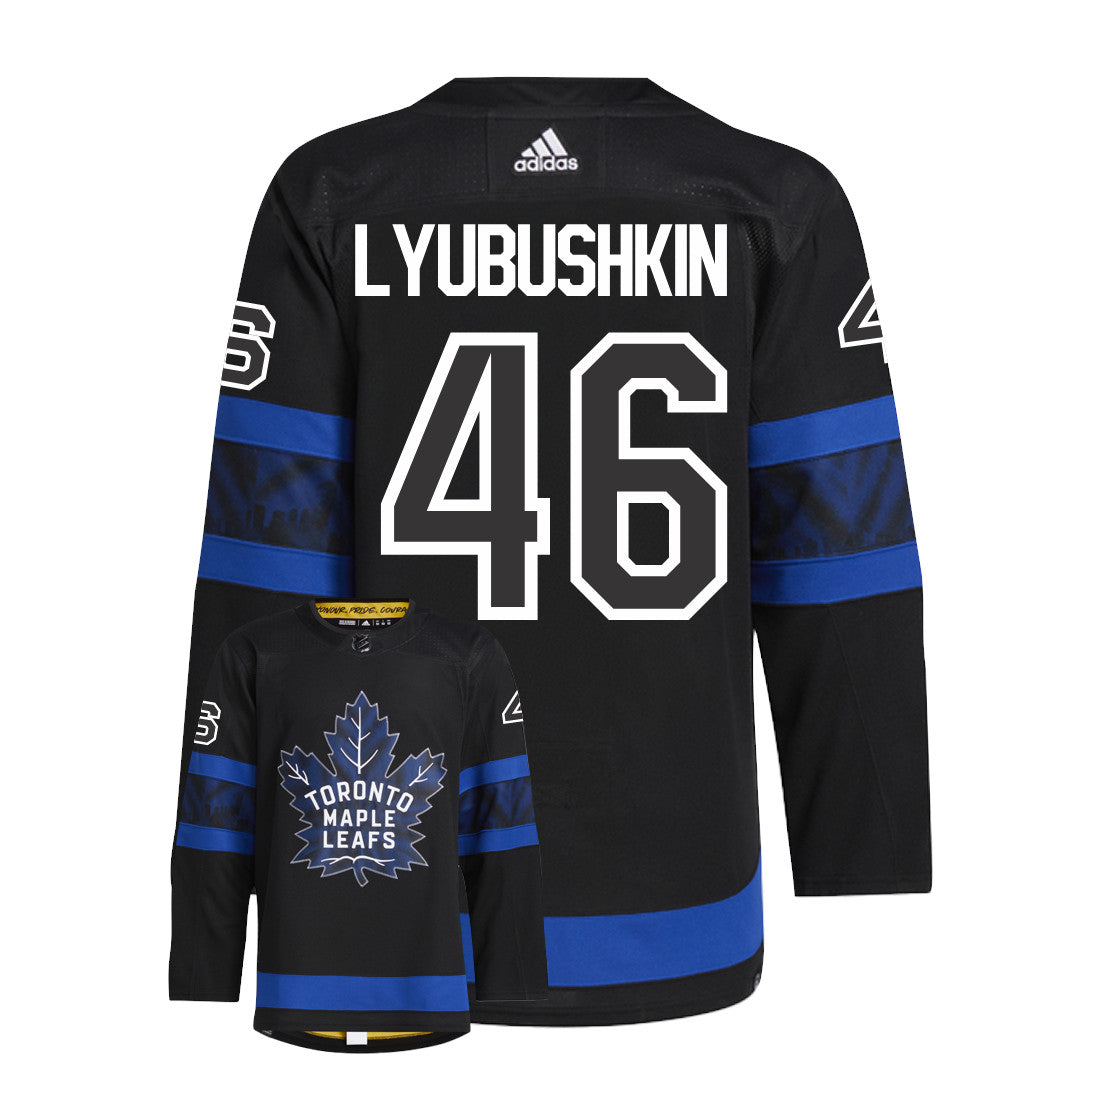 Ilya Lybushkin Toronto Maple Leafs Adidas Primegreen Authentic NHL Hockey Jersey - Back/Front View